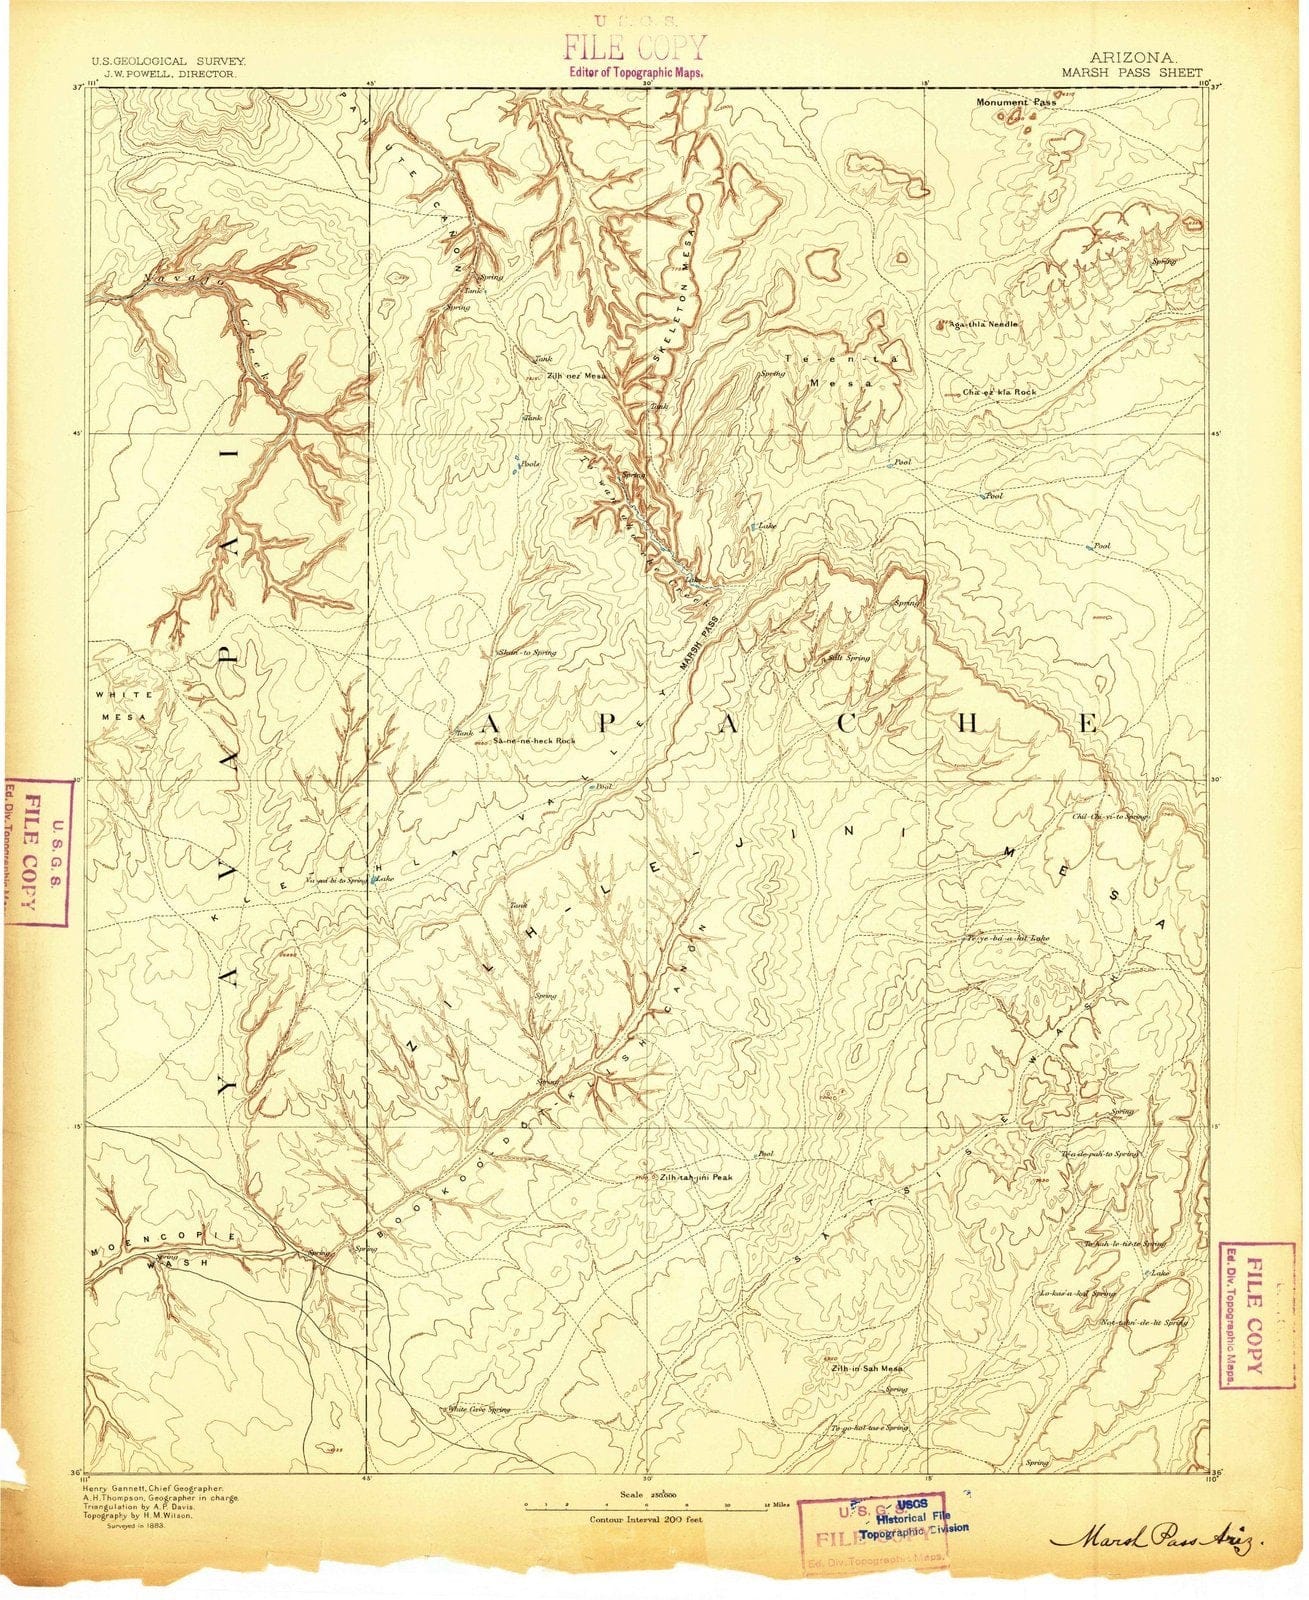 1883 Marsh Pass, AZ - Arizona - USGS Topographic Map